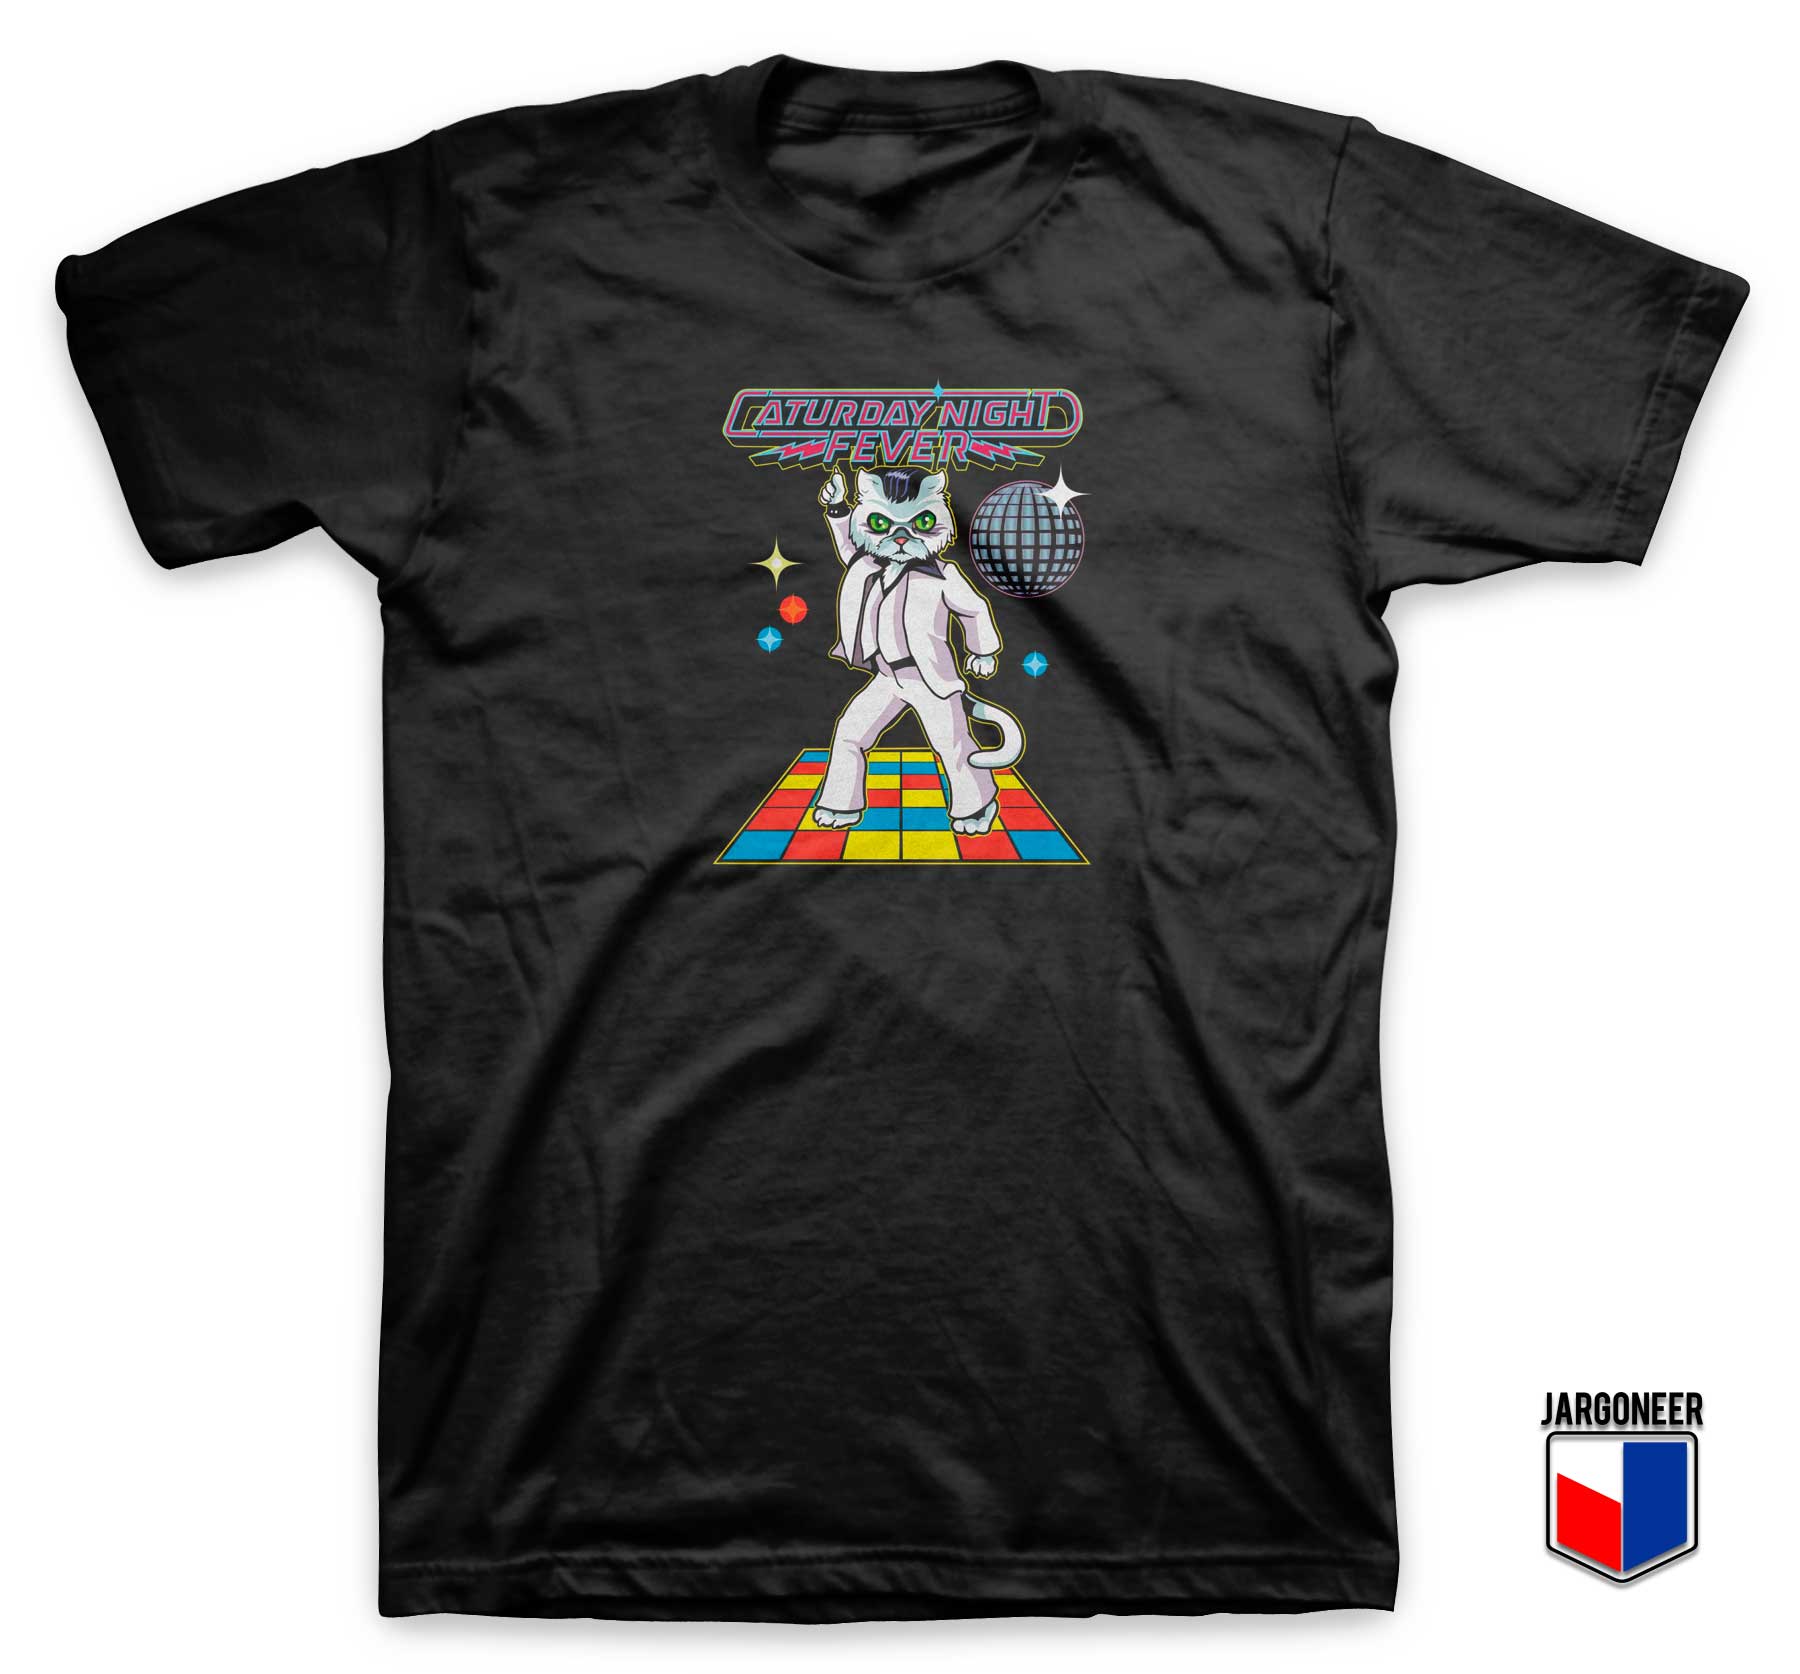 Caturday Night Fever T Shirt - Shop Unique Graphic Cool Shirt Designs